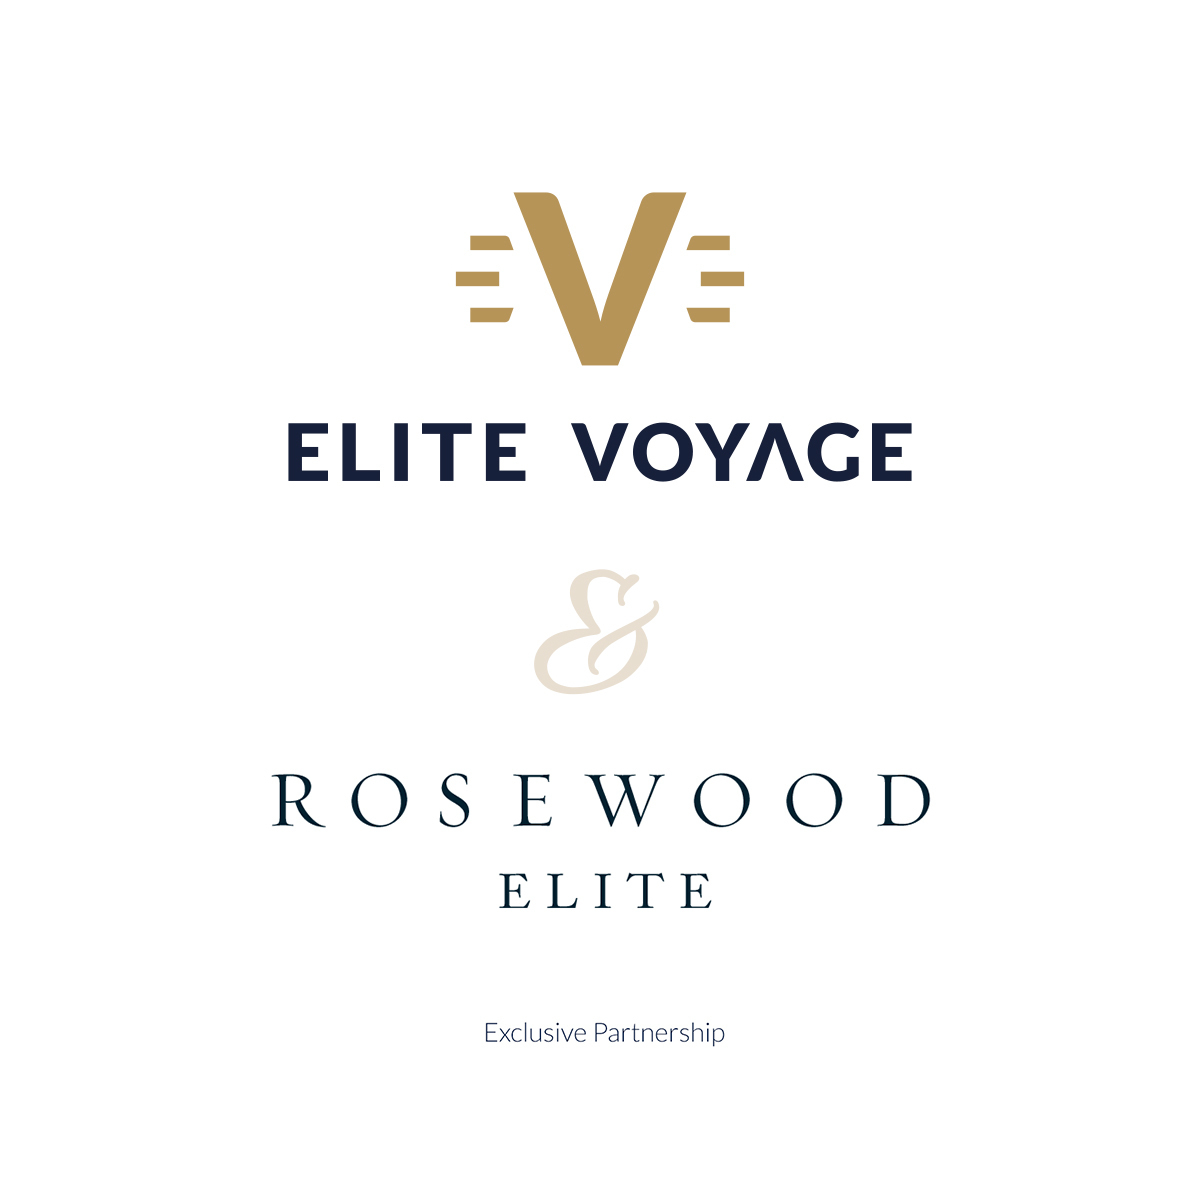 Elite Voyage Joins Belmond Bellini Club